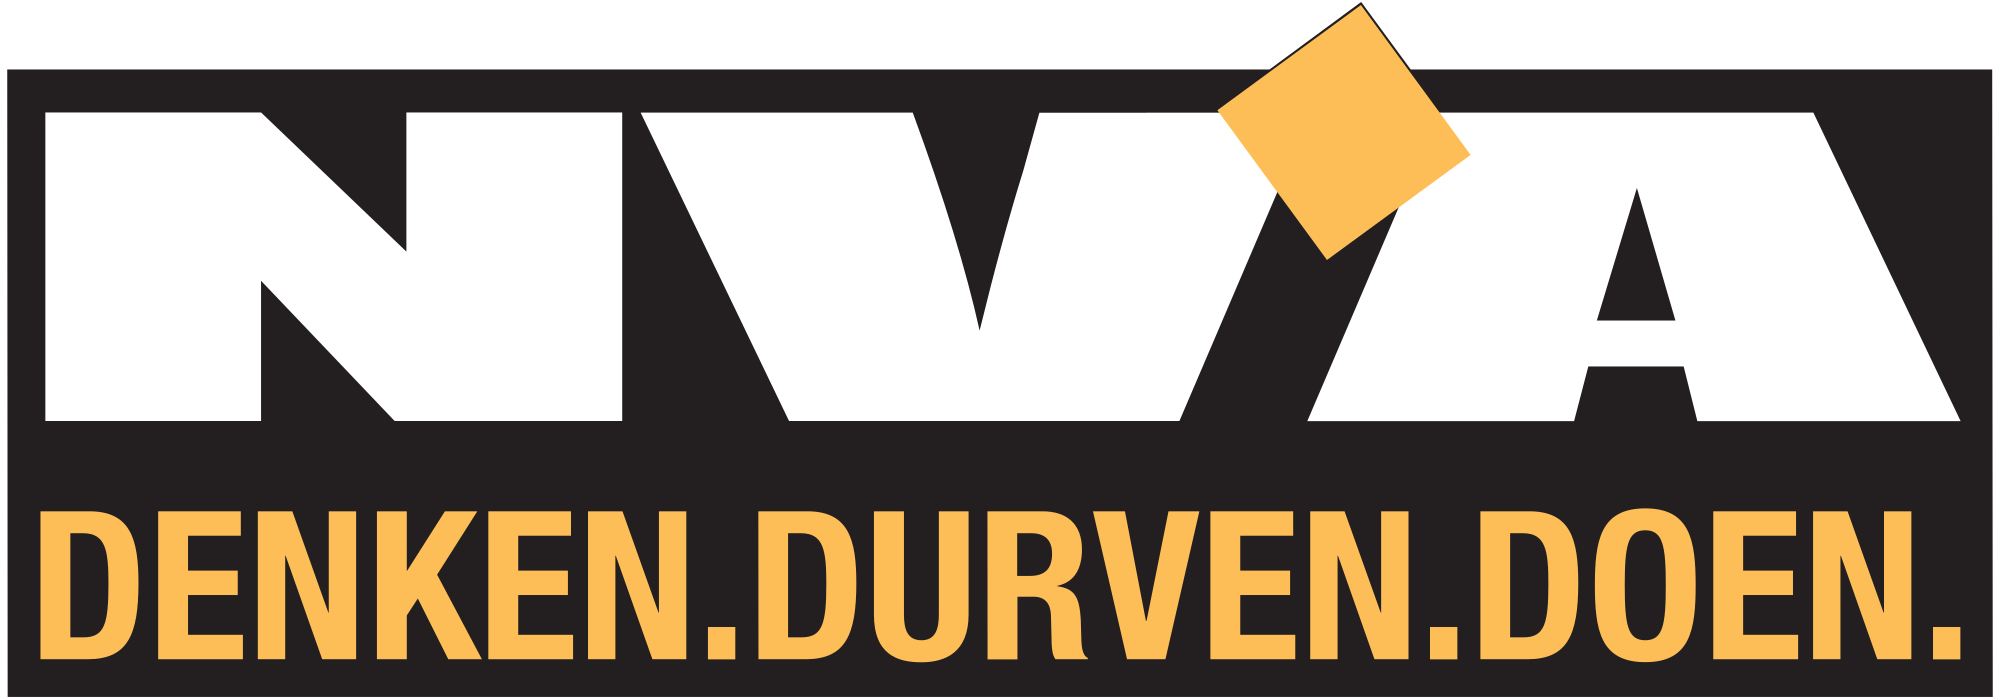 N VA logo Image public domain